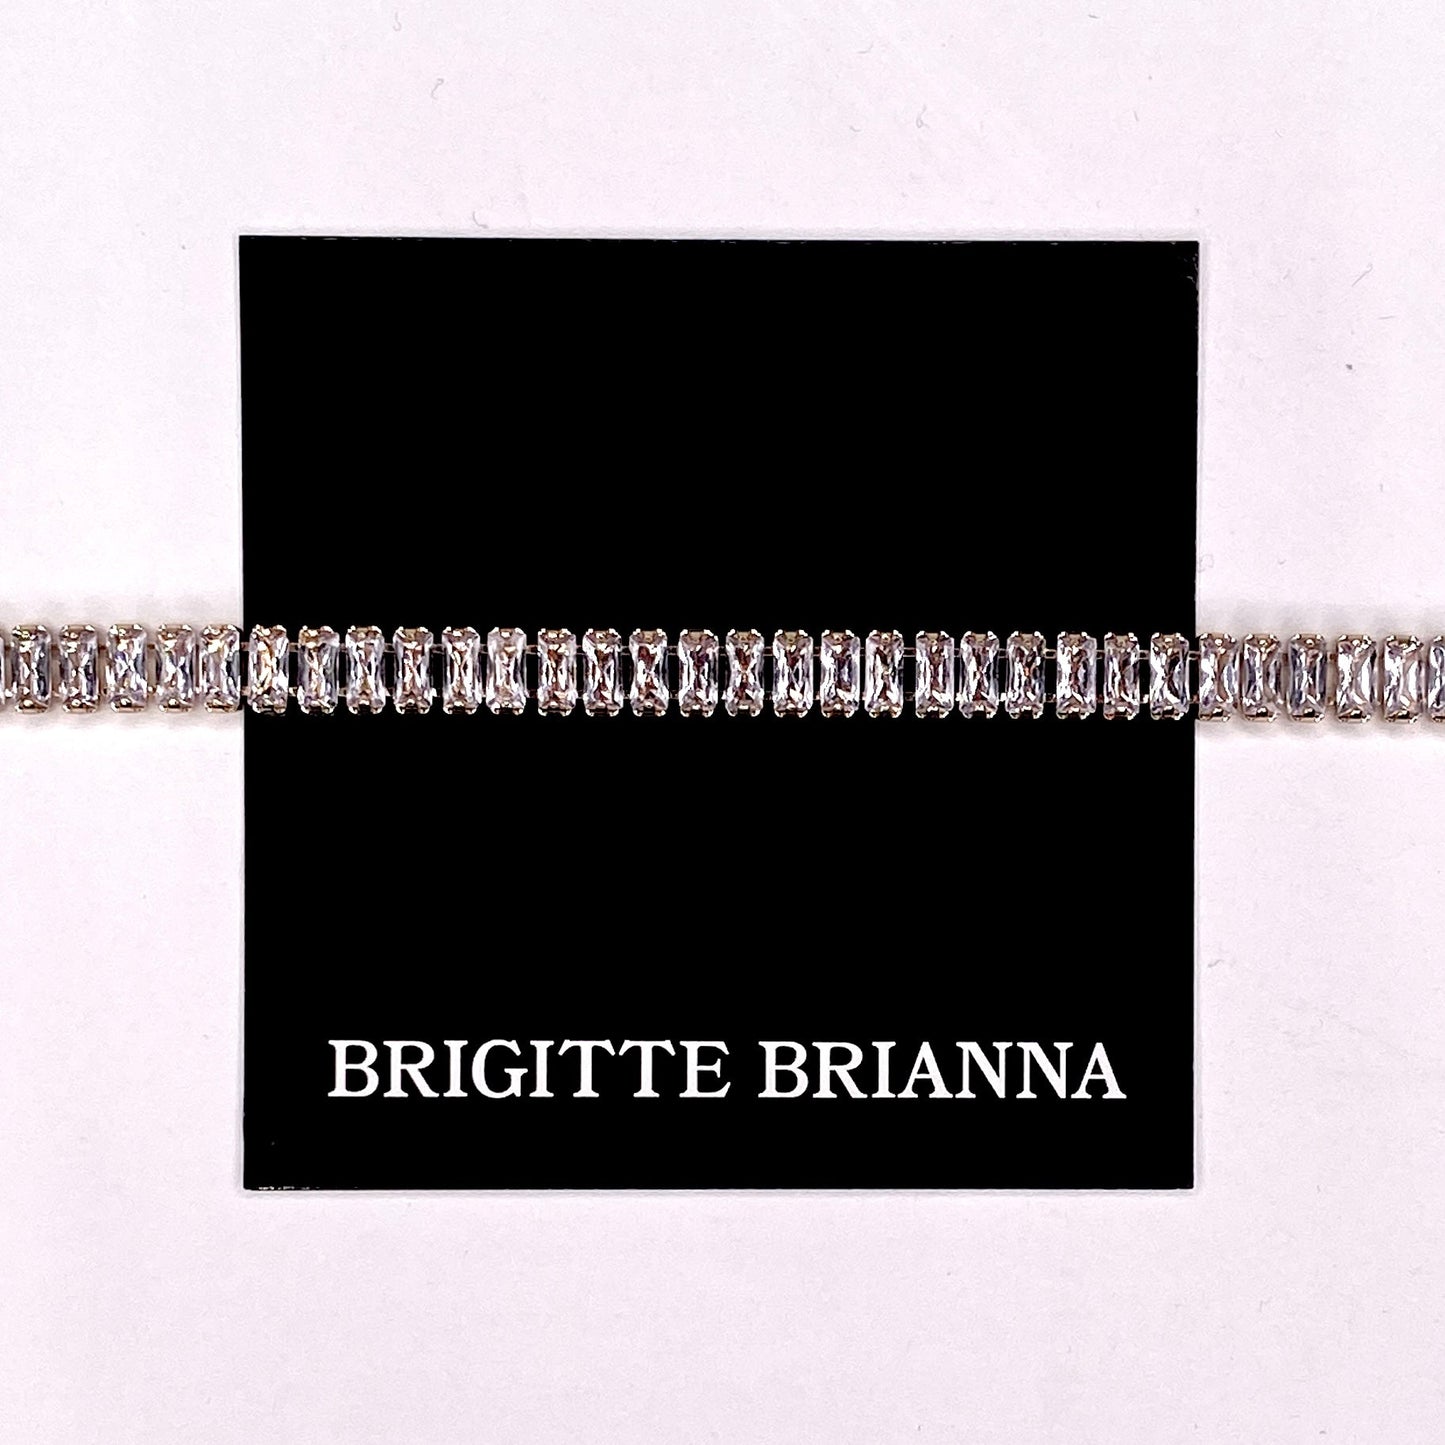 Iced Diamond Bracelet